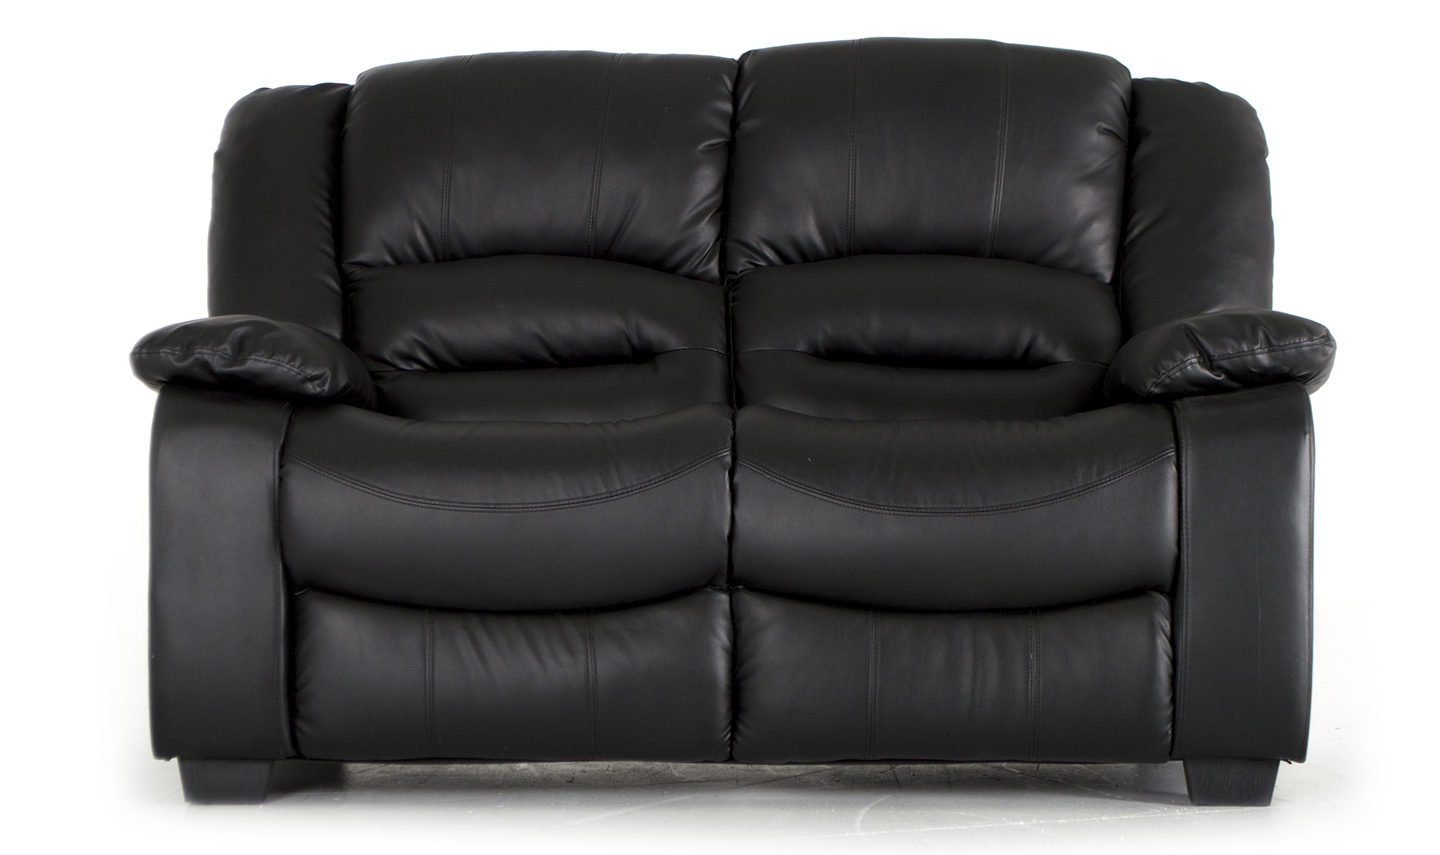 Barletto Black 2 Seater Leather Sofa